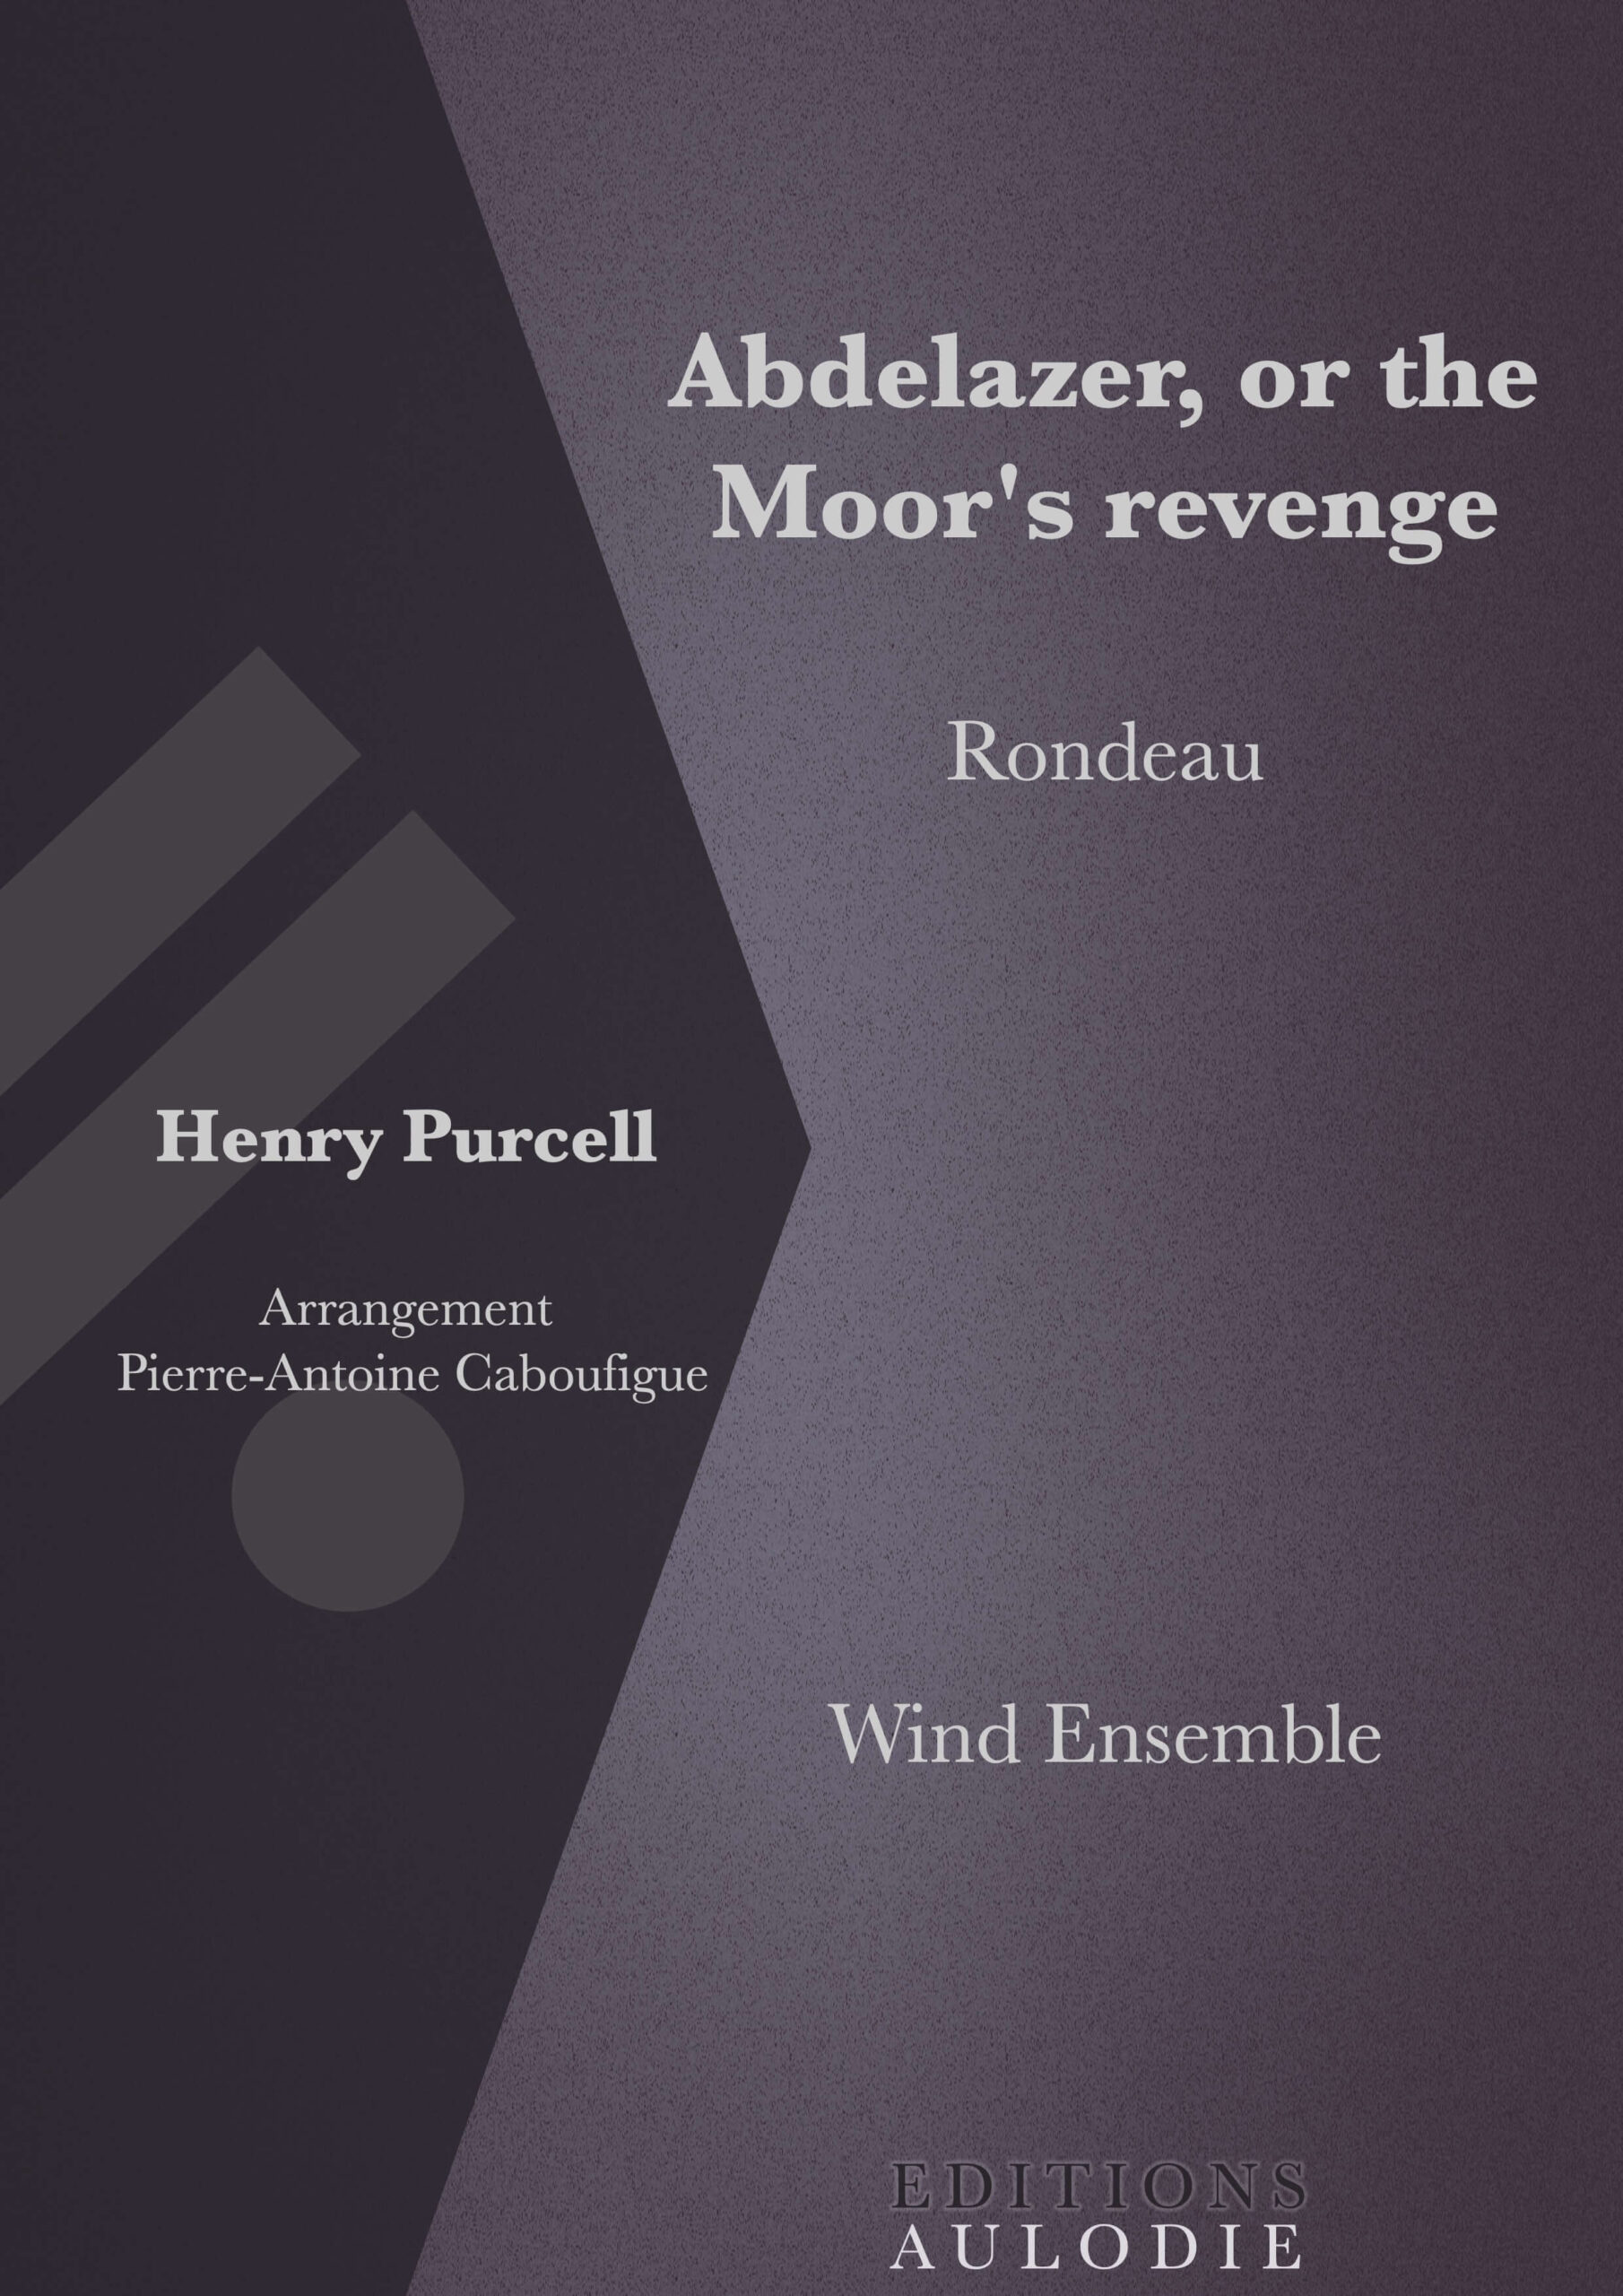 EA01047-Abdelazer_or_the_Moors_revenge-Rondeau-Henry_Purcell-Wind_Ensemble